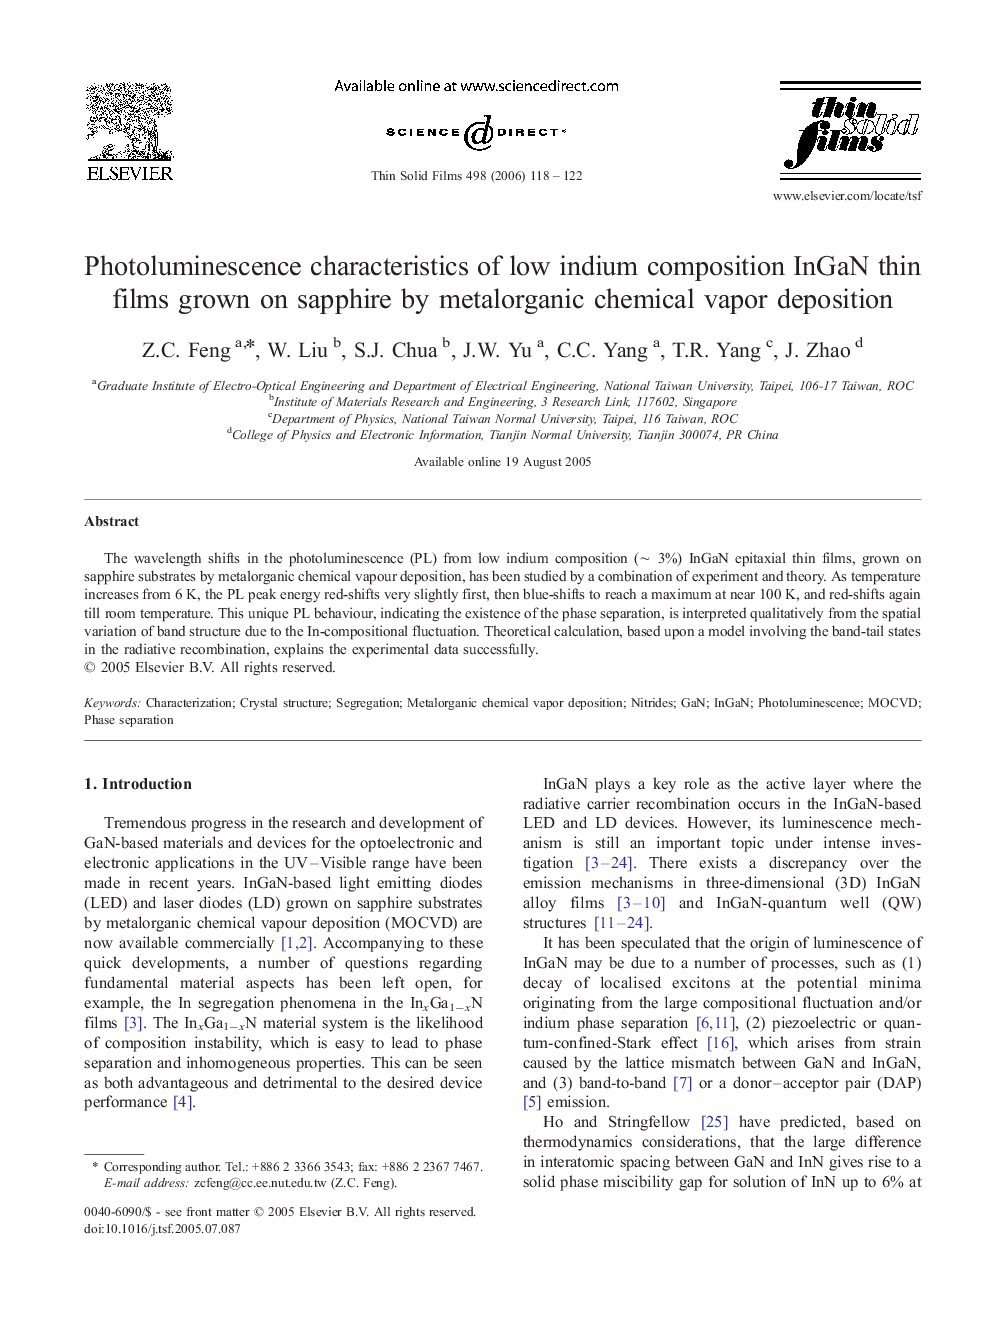 Photoluminescence characteristics of low indium composition InGaN thin films grown on sapphire by metalorganic chemical vapor deposition